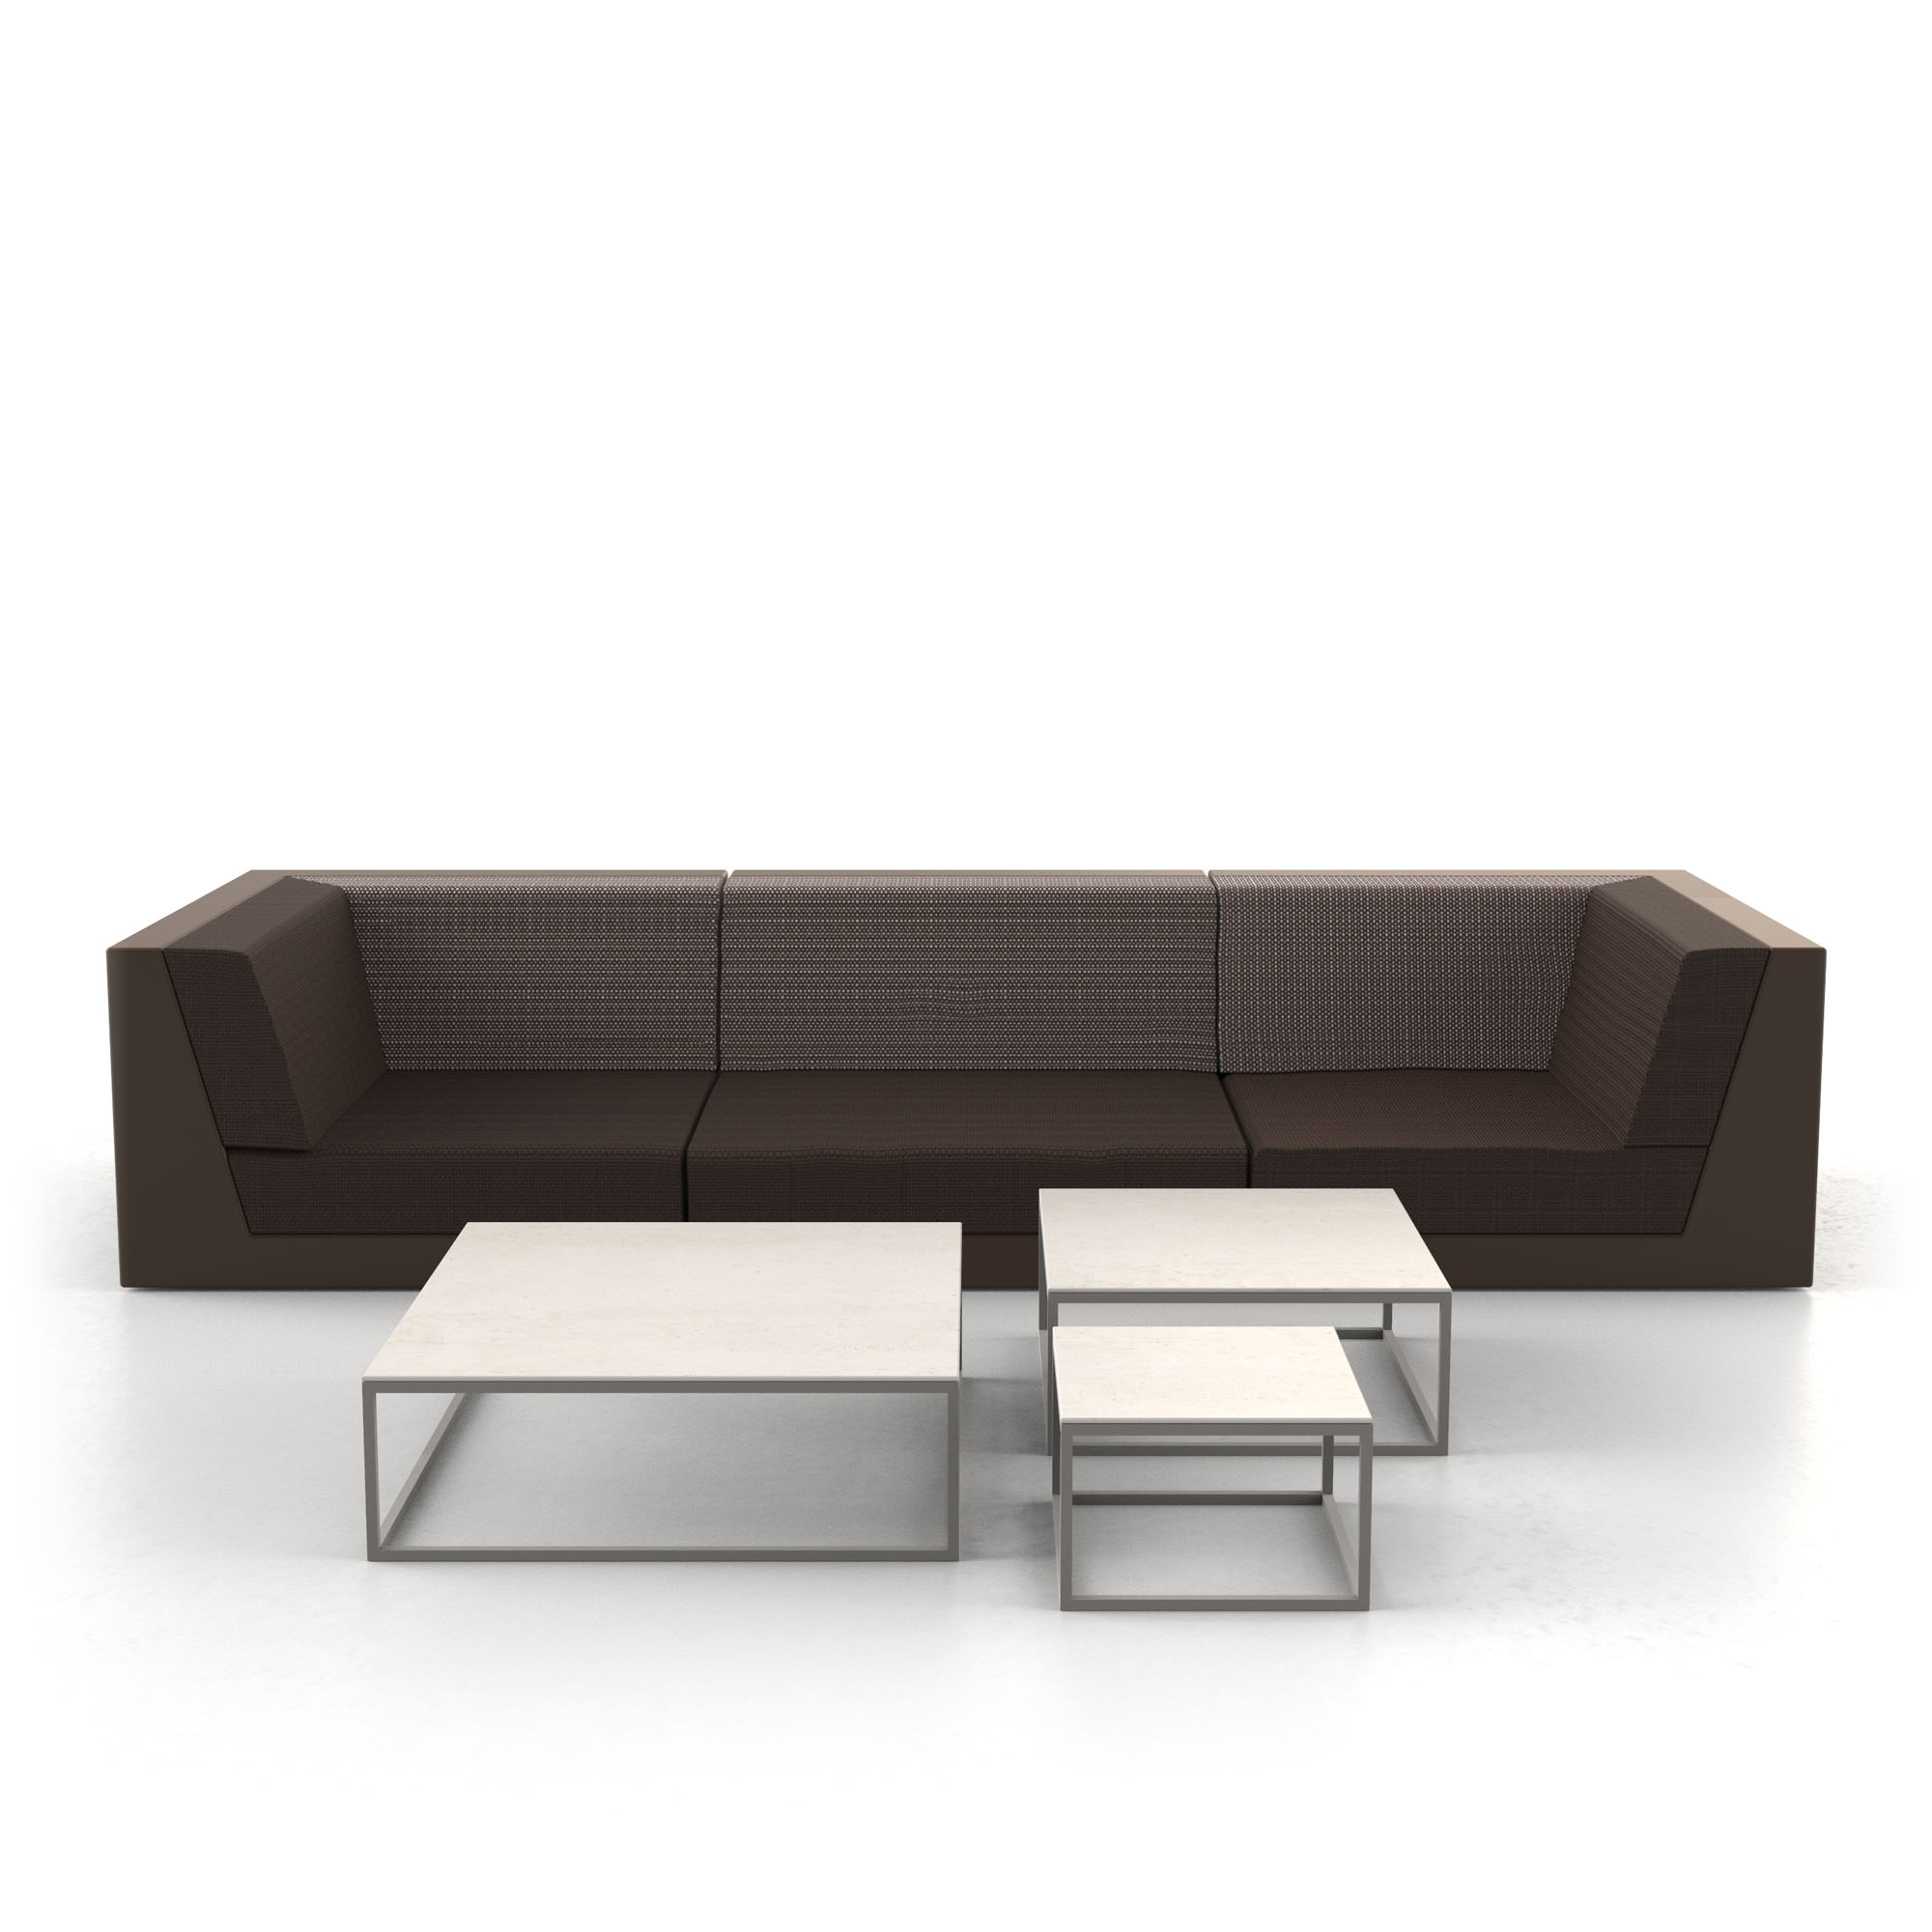 Vondom PIxel outdoor modular sofa Ramon Esteve 5 